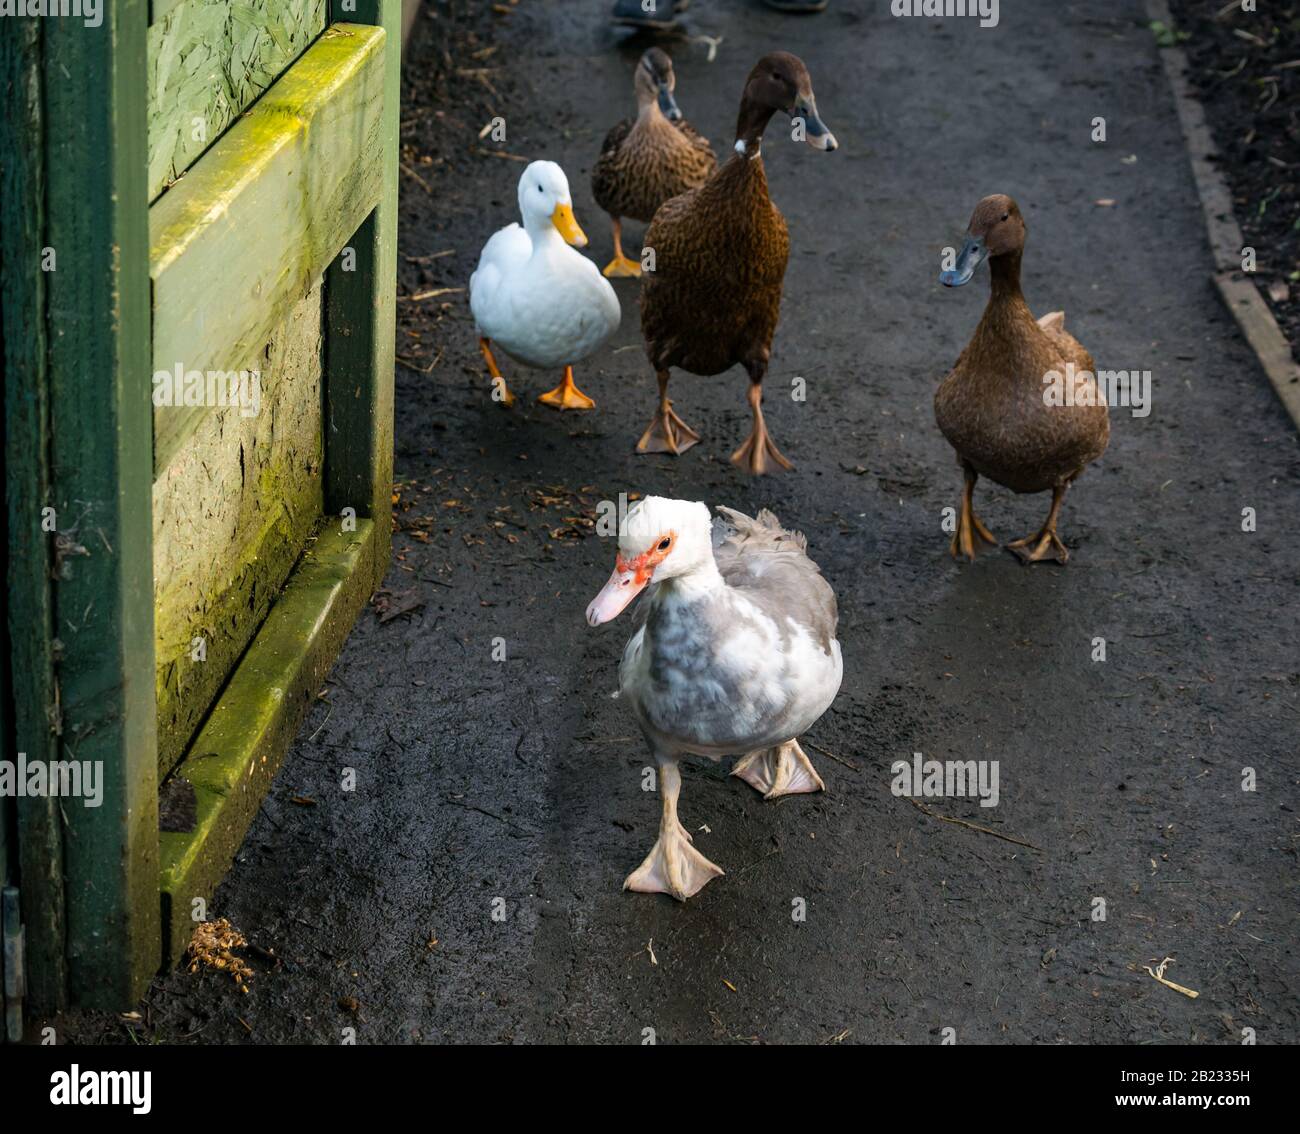 Edinburgh, Scotland, United Kingdom. 29th Feb, 2020. Love Gorgie Farm: Ducks make their way to the pond with a Muscovy duck (Cairina moschata) leading the group of ducks Stock Photo